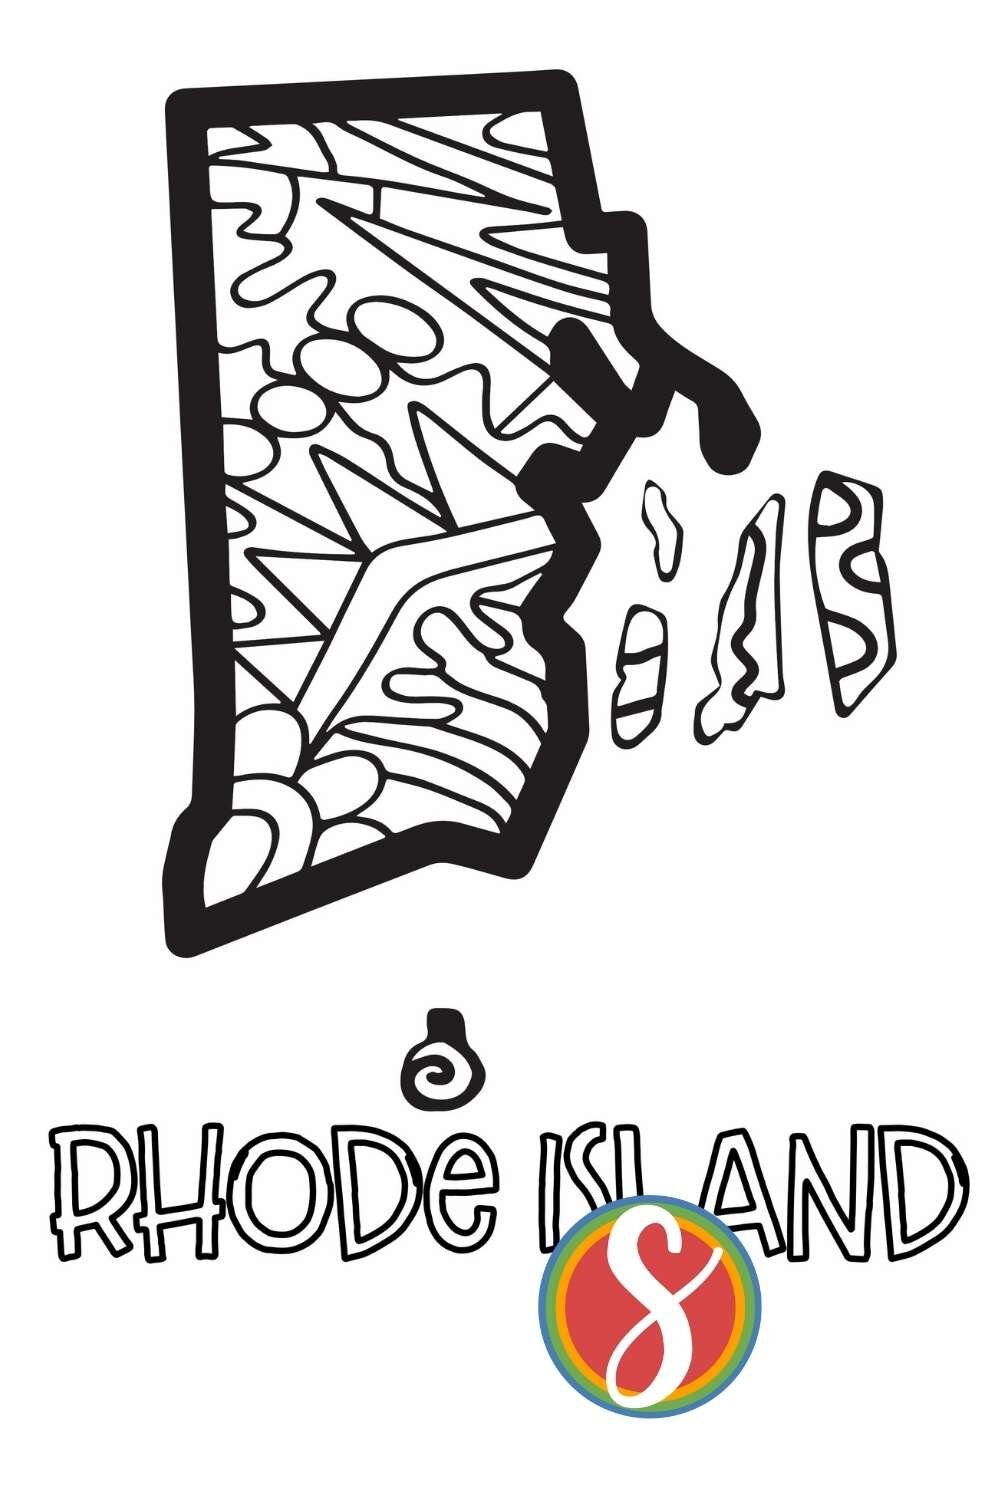 Free rhode island coloring pages â stevie doodles